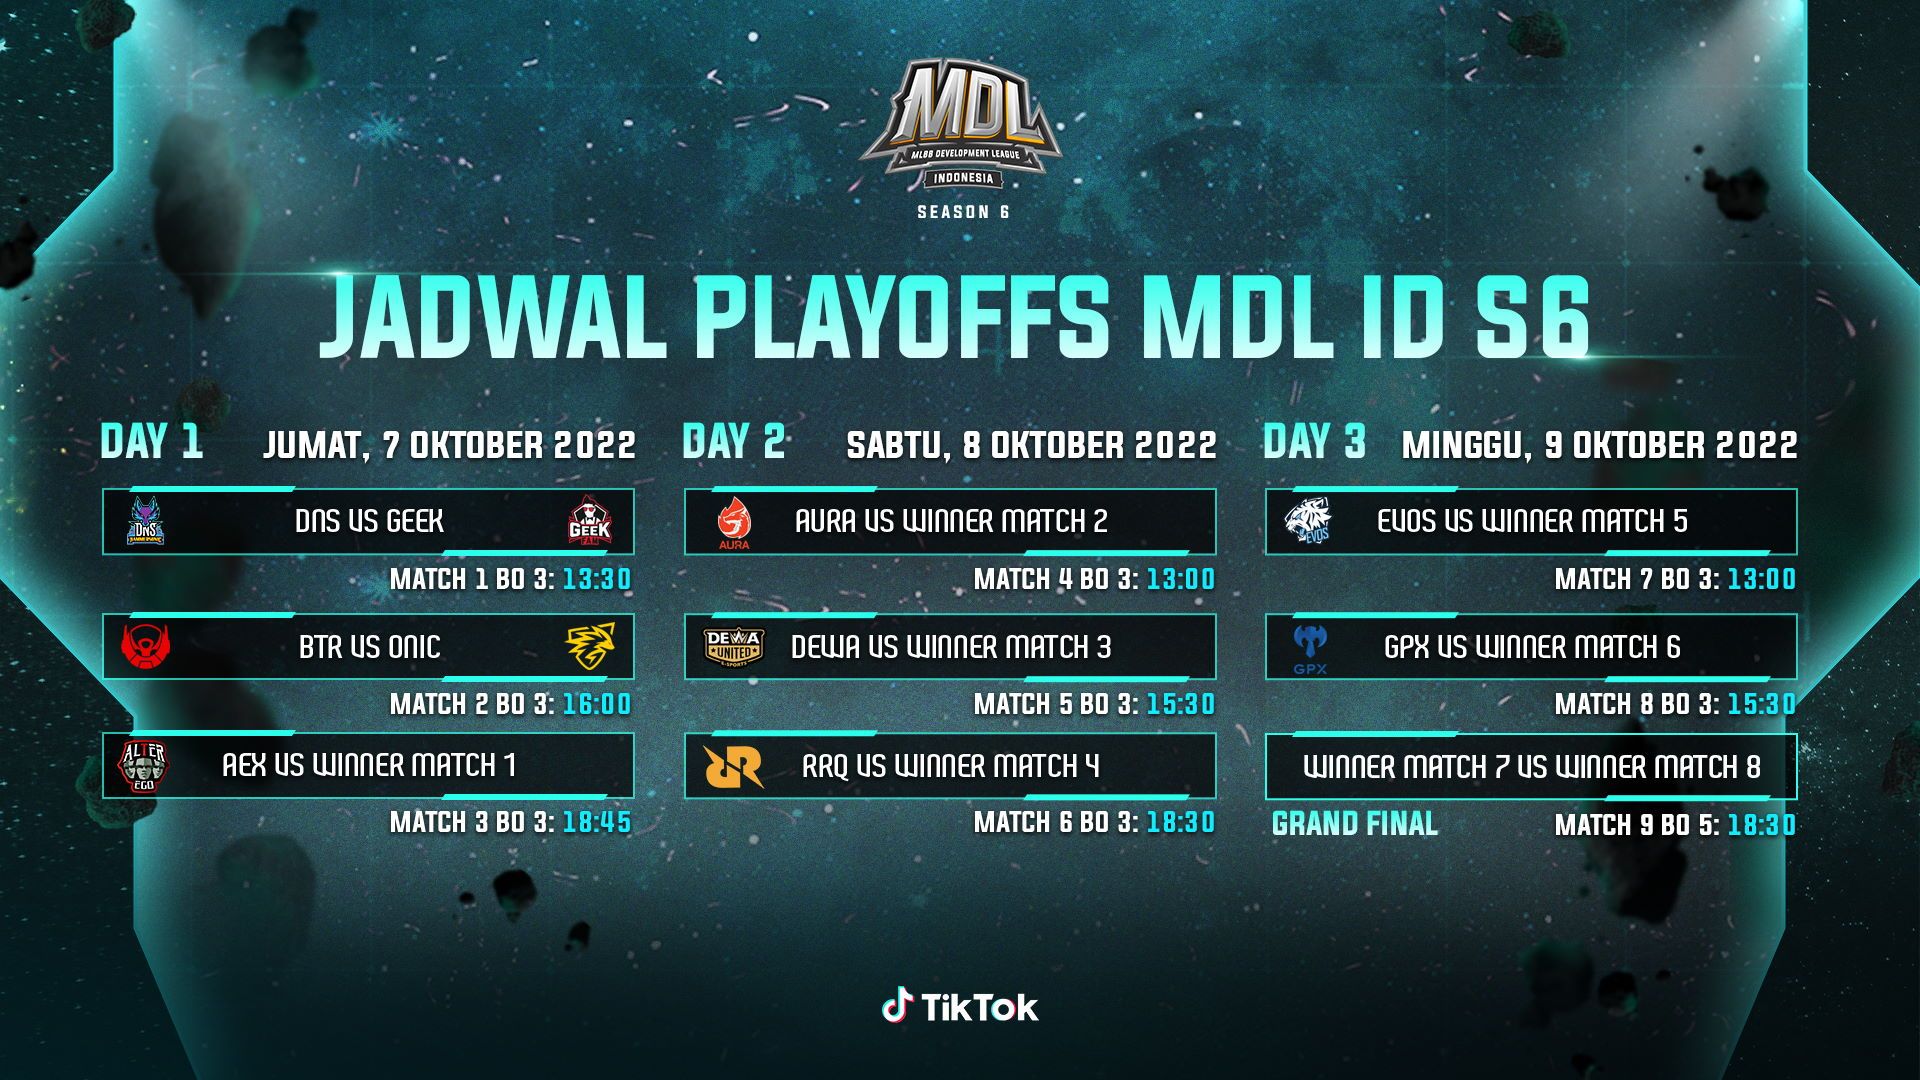 Jadwal playoff MDL Season 6 serta link live streaming dan cara menonton